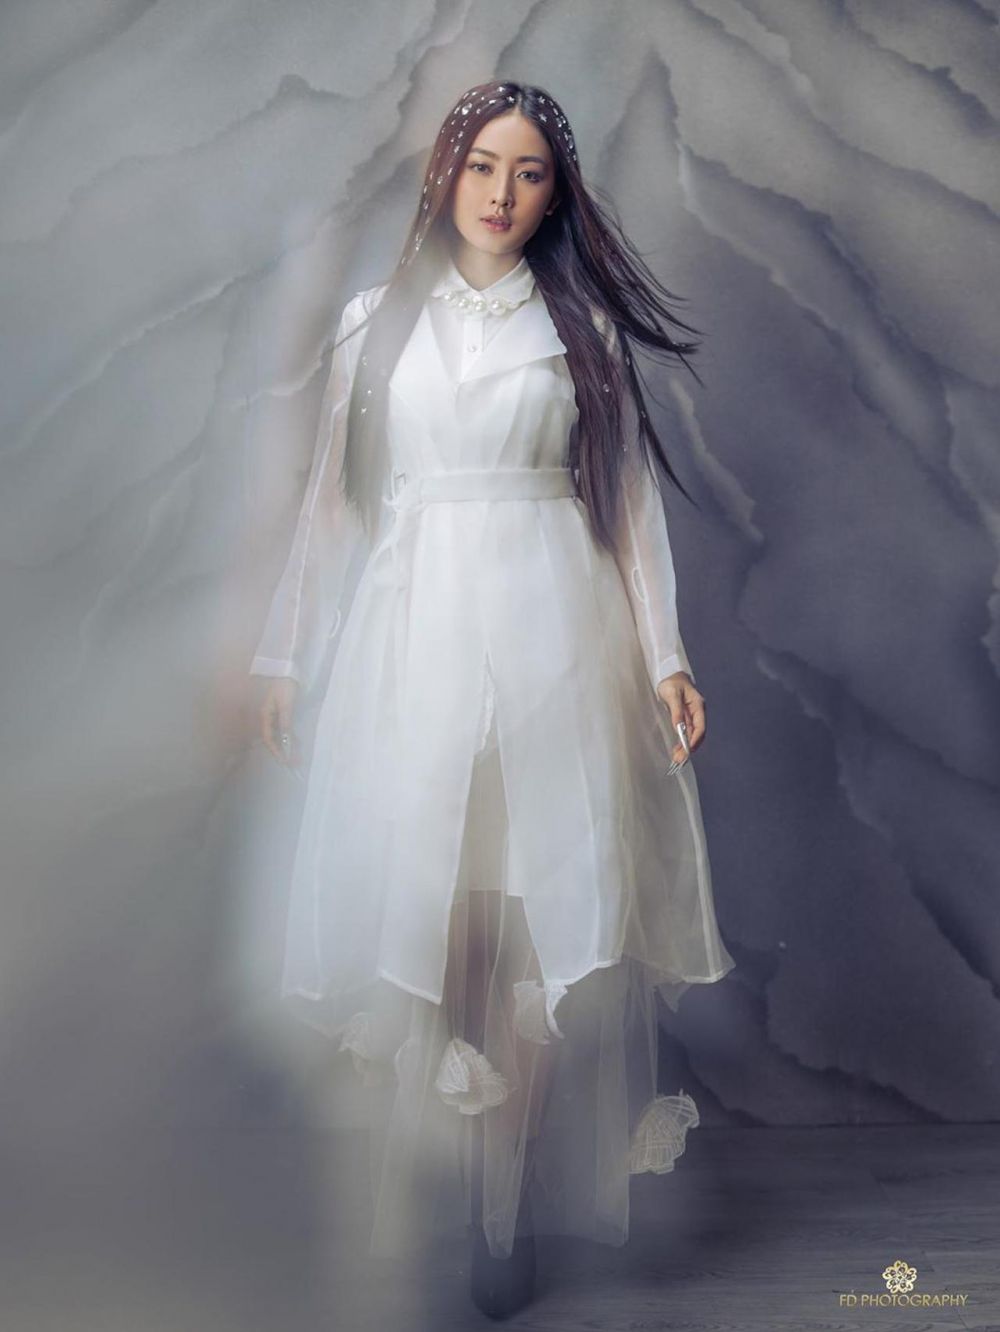 6 Pemotretan Natasha Wilona dengan tema Luminous in White, memesona